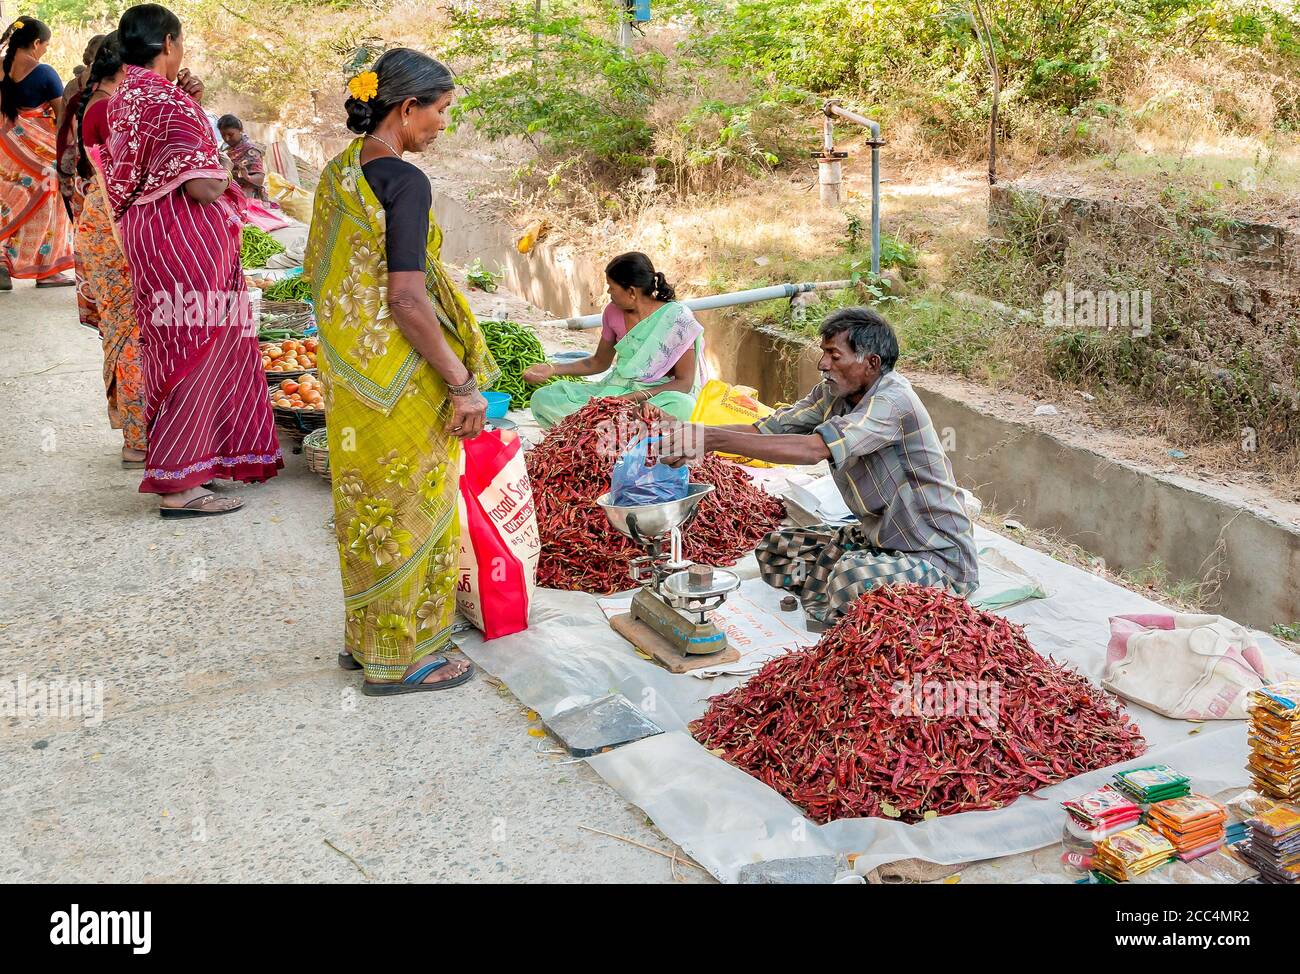 Puttaparthi, Andhra Pradesh, India - January 13, 2013: Indian man sell red pepper at street market of Puttaparthi. Stock Photo